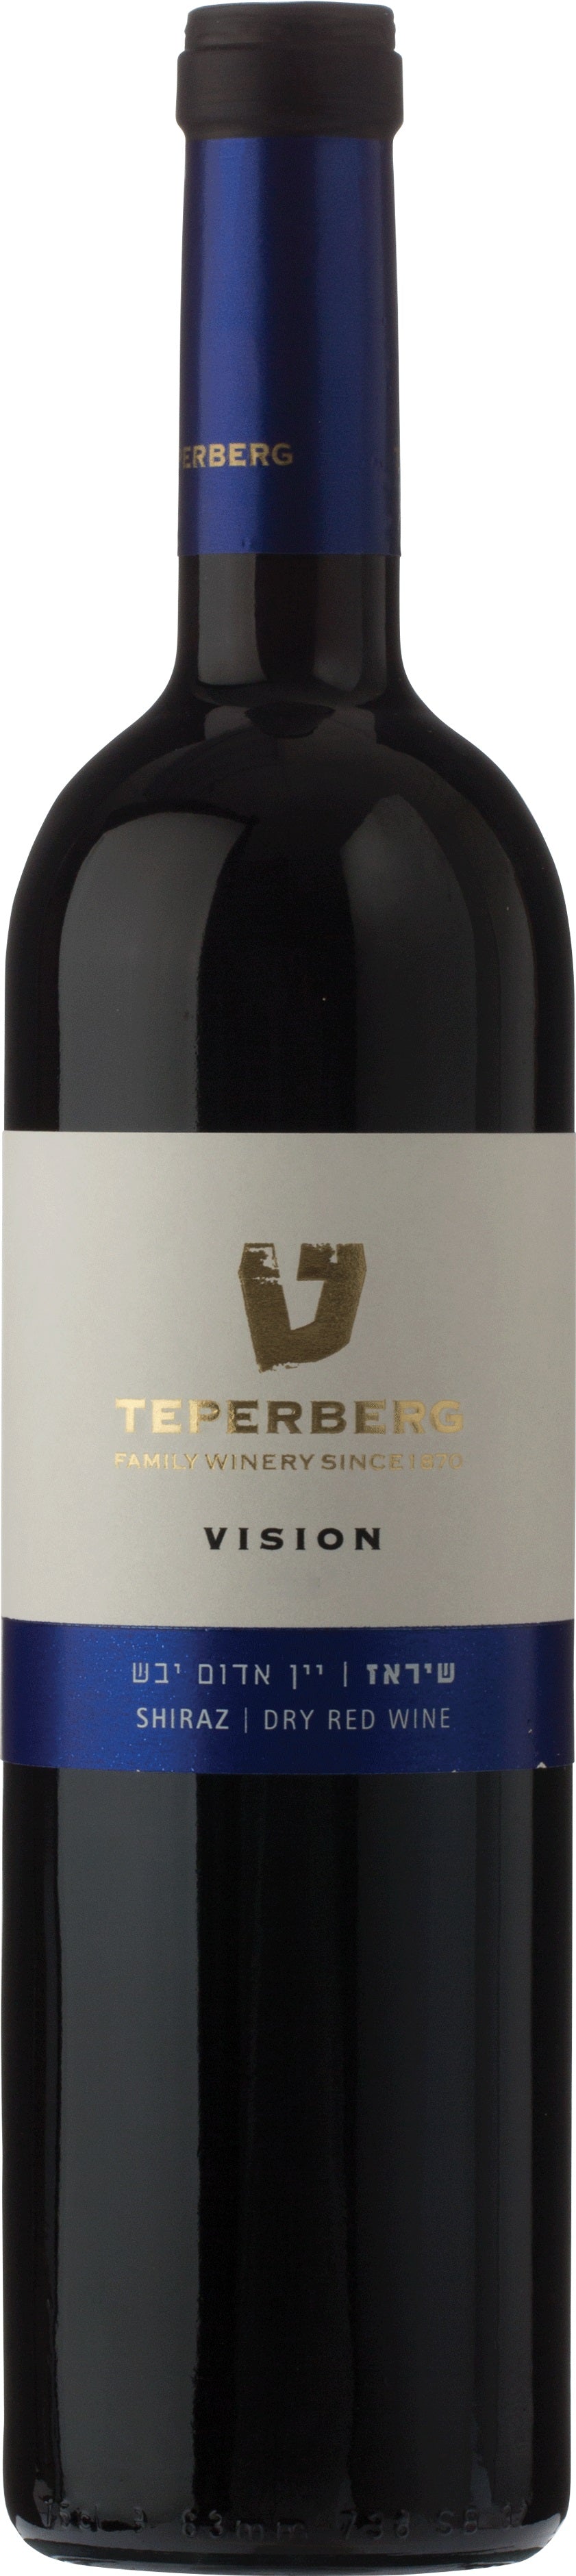 Teperberg Shiraz Vision 2019